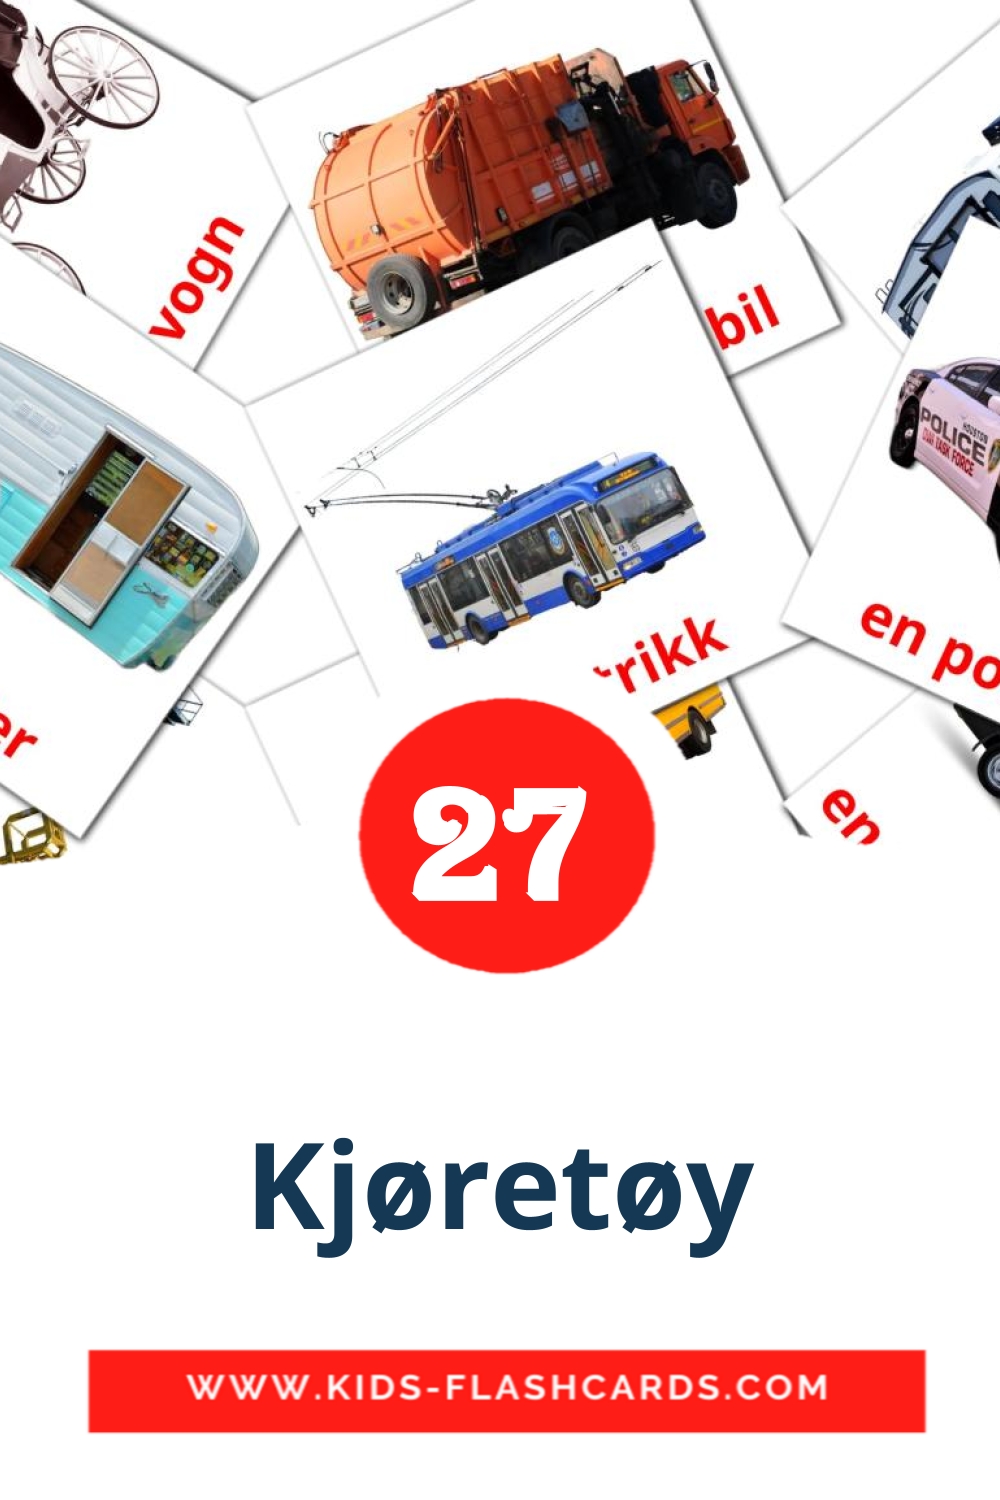 Kjøretøy на норвежском для Детского Сада (28 карточек)